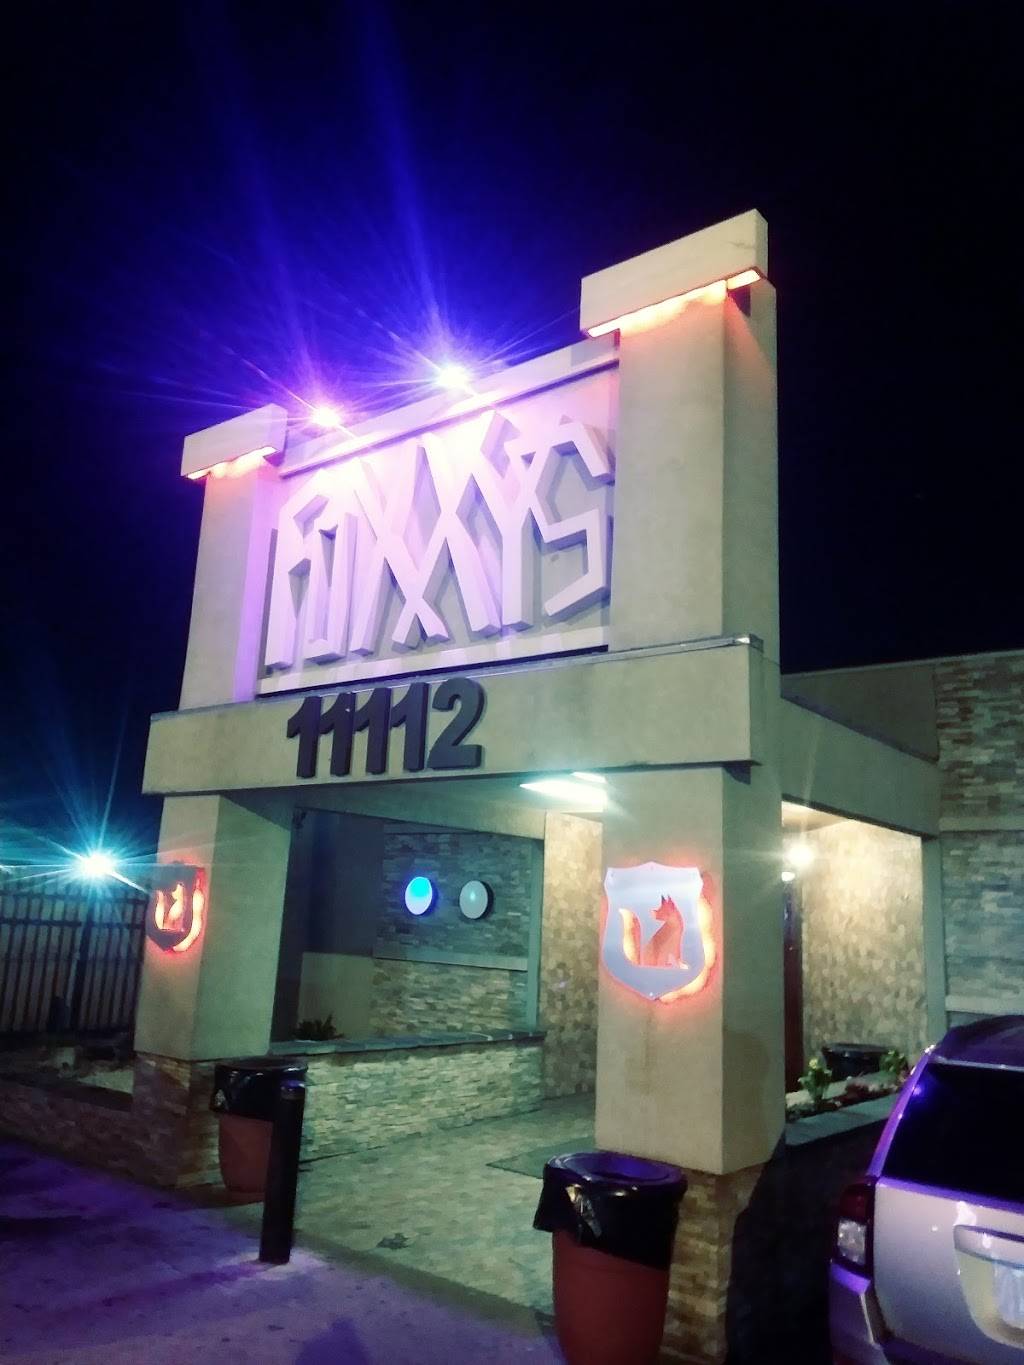 Foxxys Bikini Sport Bar and Grill | night club | 11112 S Post Oak Rd, Houston, TX 77035, USA | 7137295511 OR +1 713-729-5511